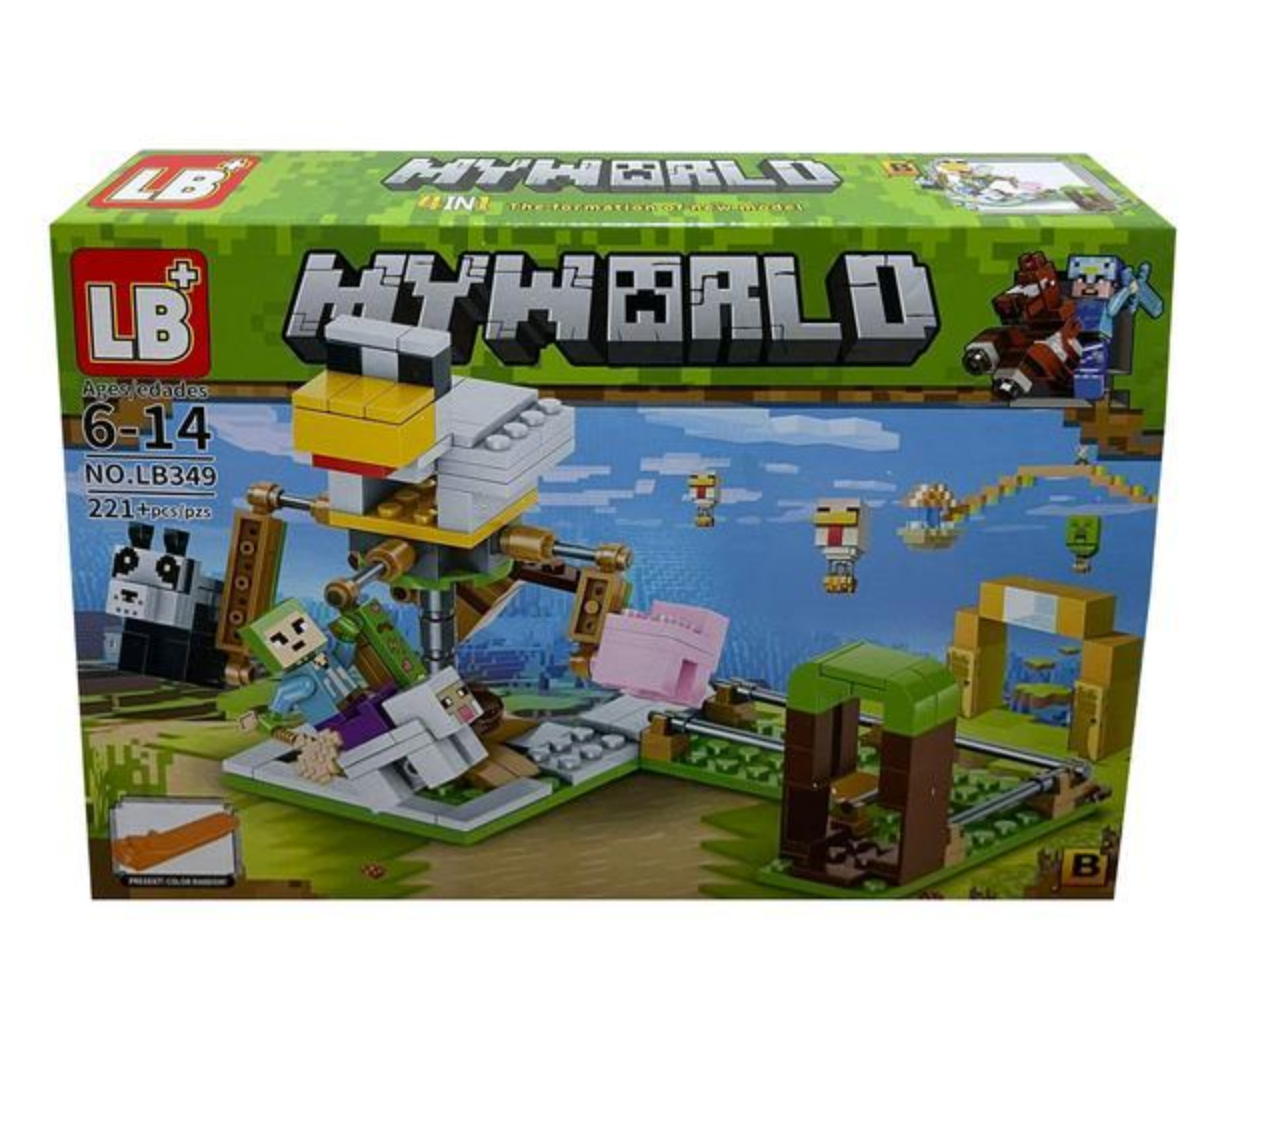 NOU: Set de constructie LB+, My World of Minecraft cu efecte luminoase si parti mobile, 221 piese